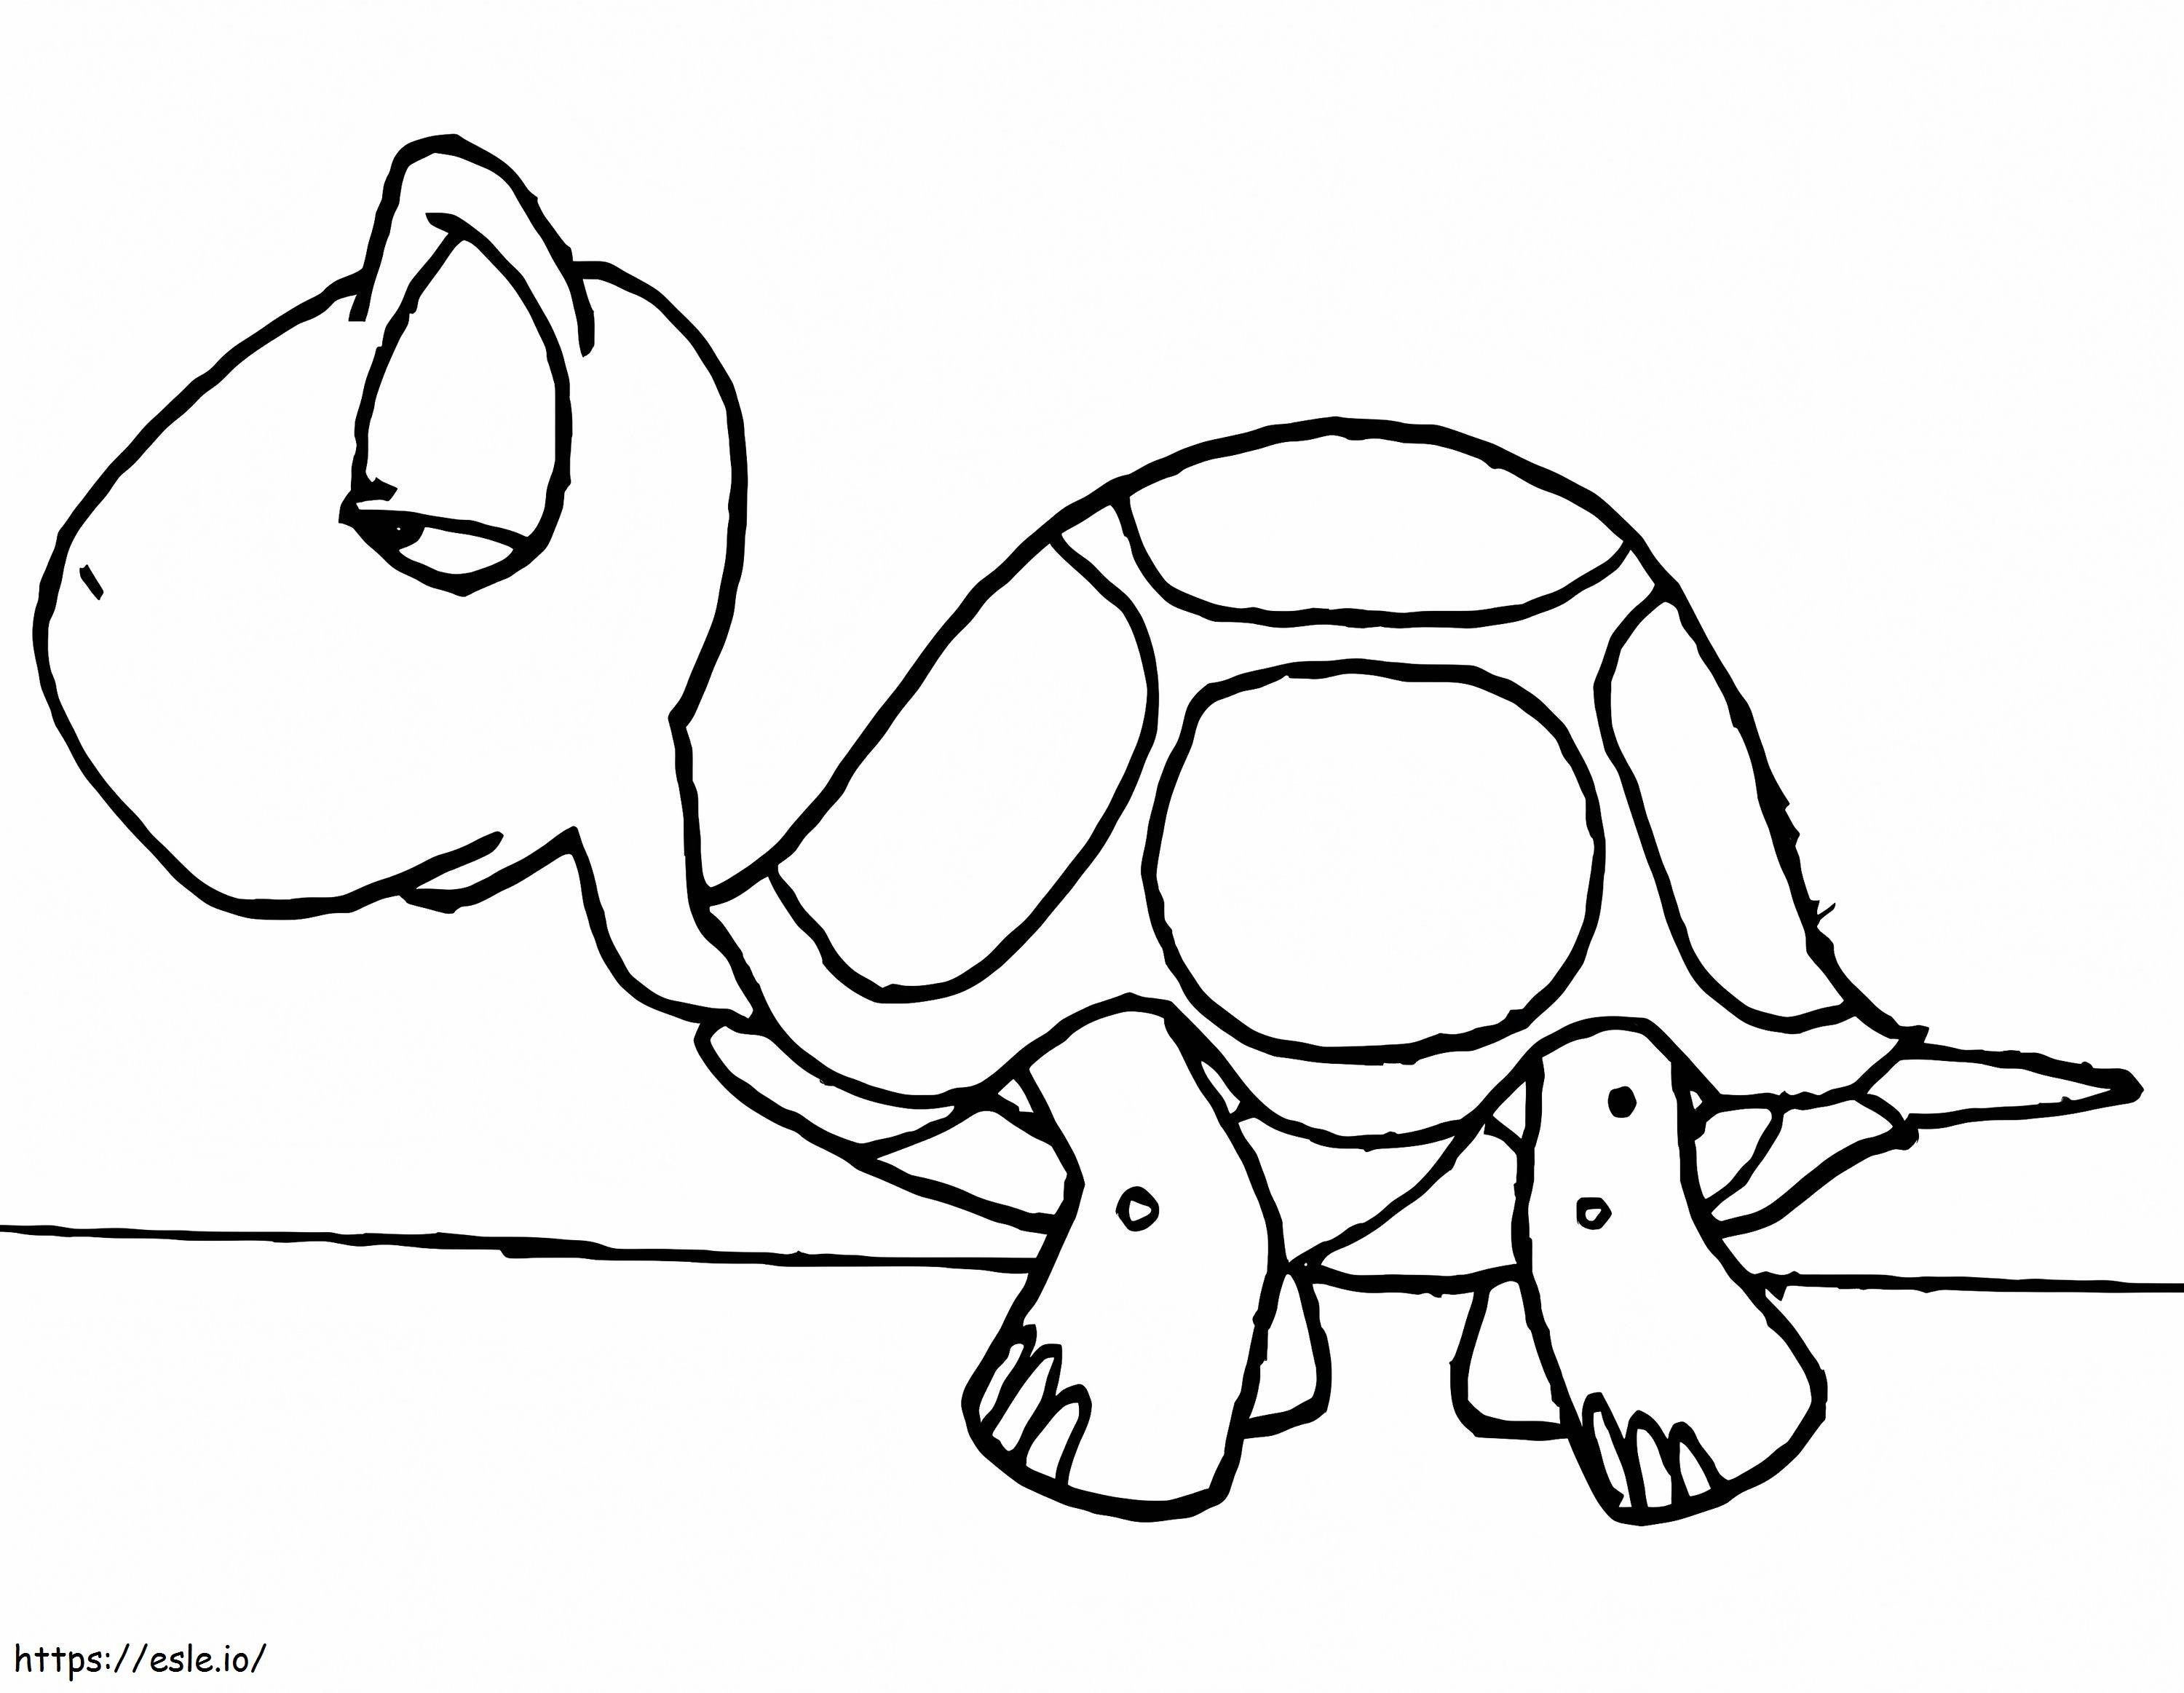 Sad Turtle coloring page